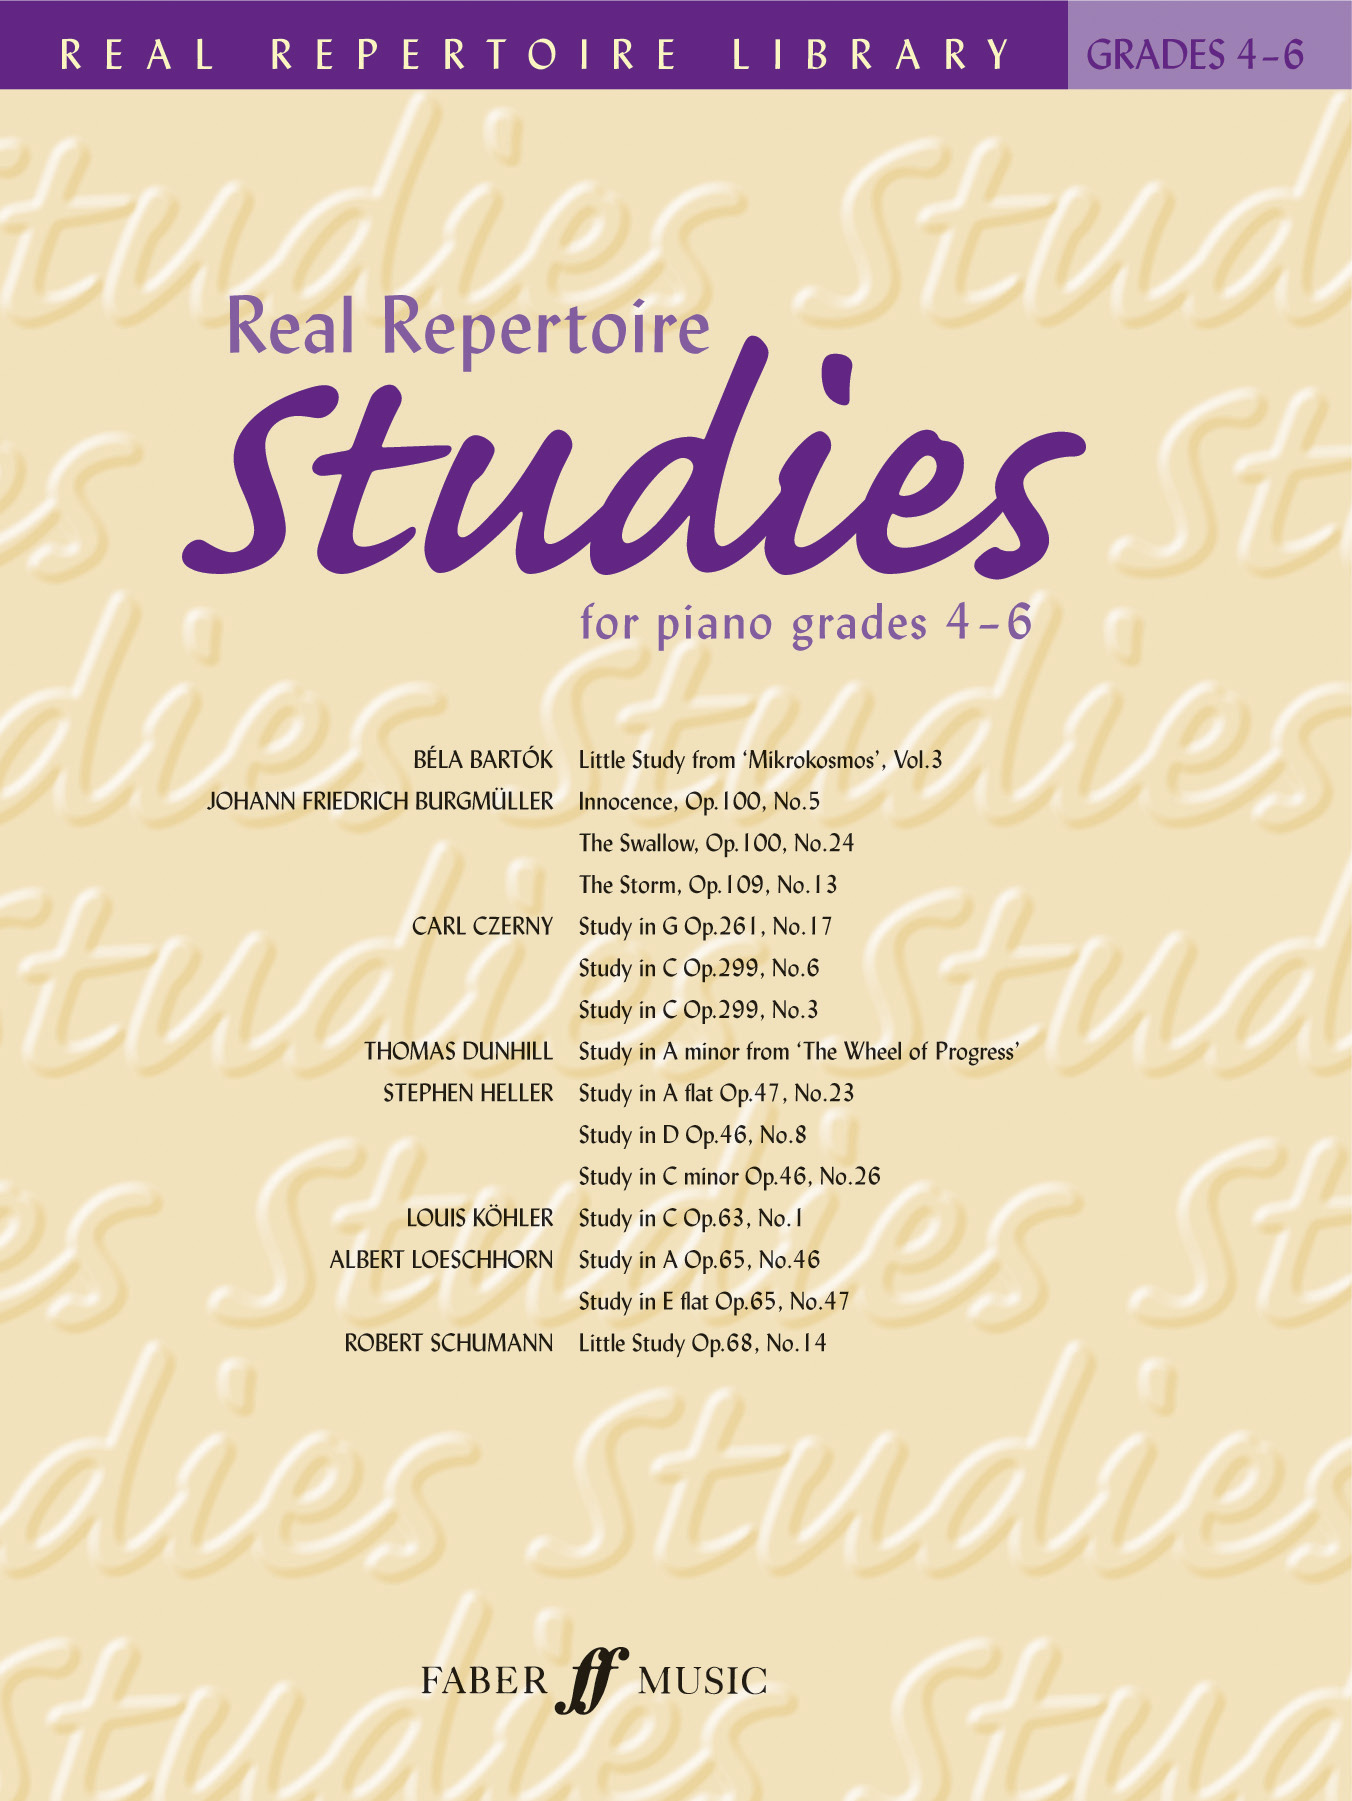 Real Repertoire studies. Grades 4-6: Piano: Instrumental Album